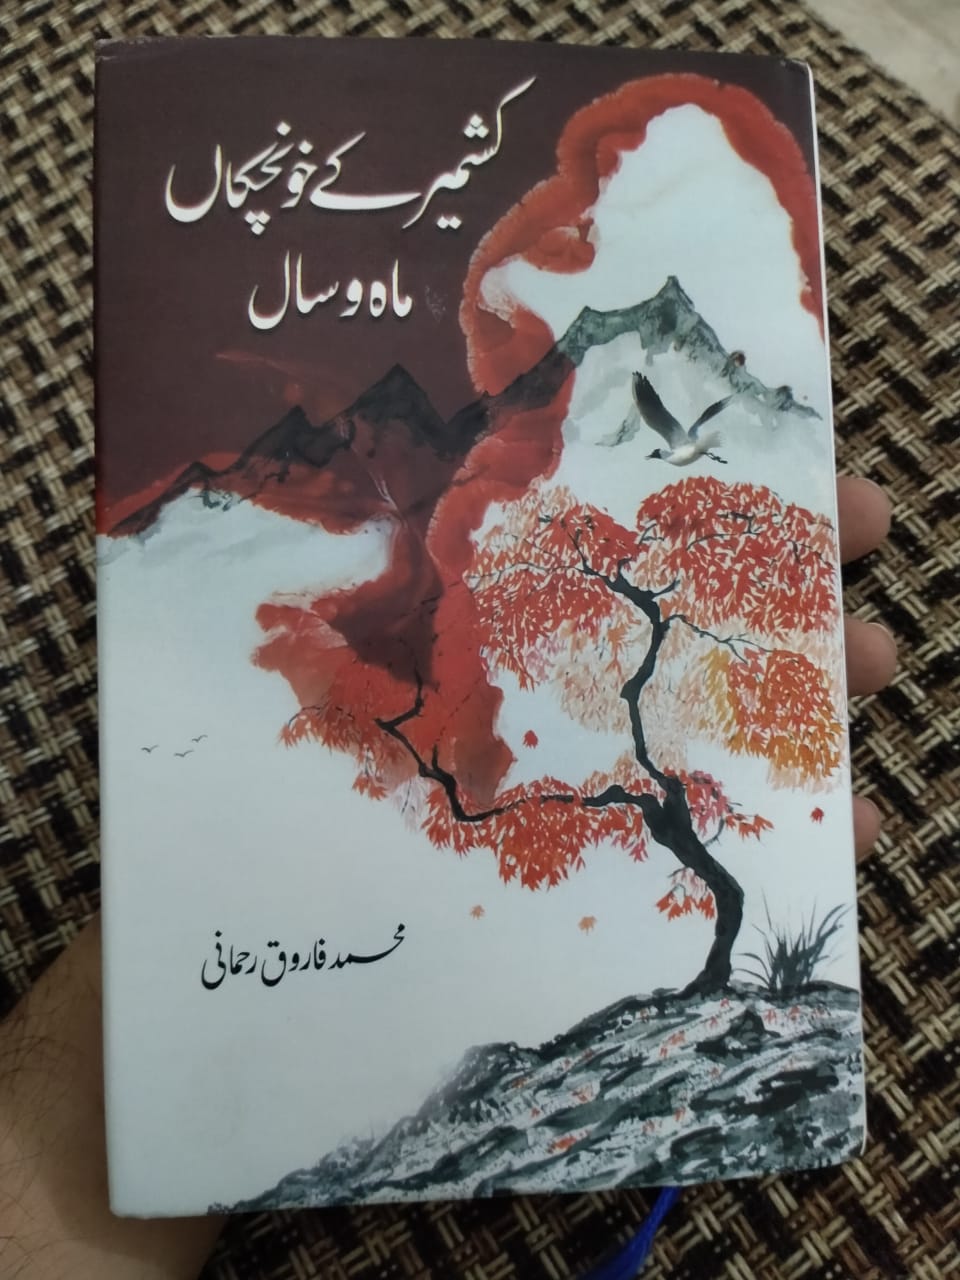 kashmir kay khoonchukan mah wa sal book by farooq rehmani